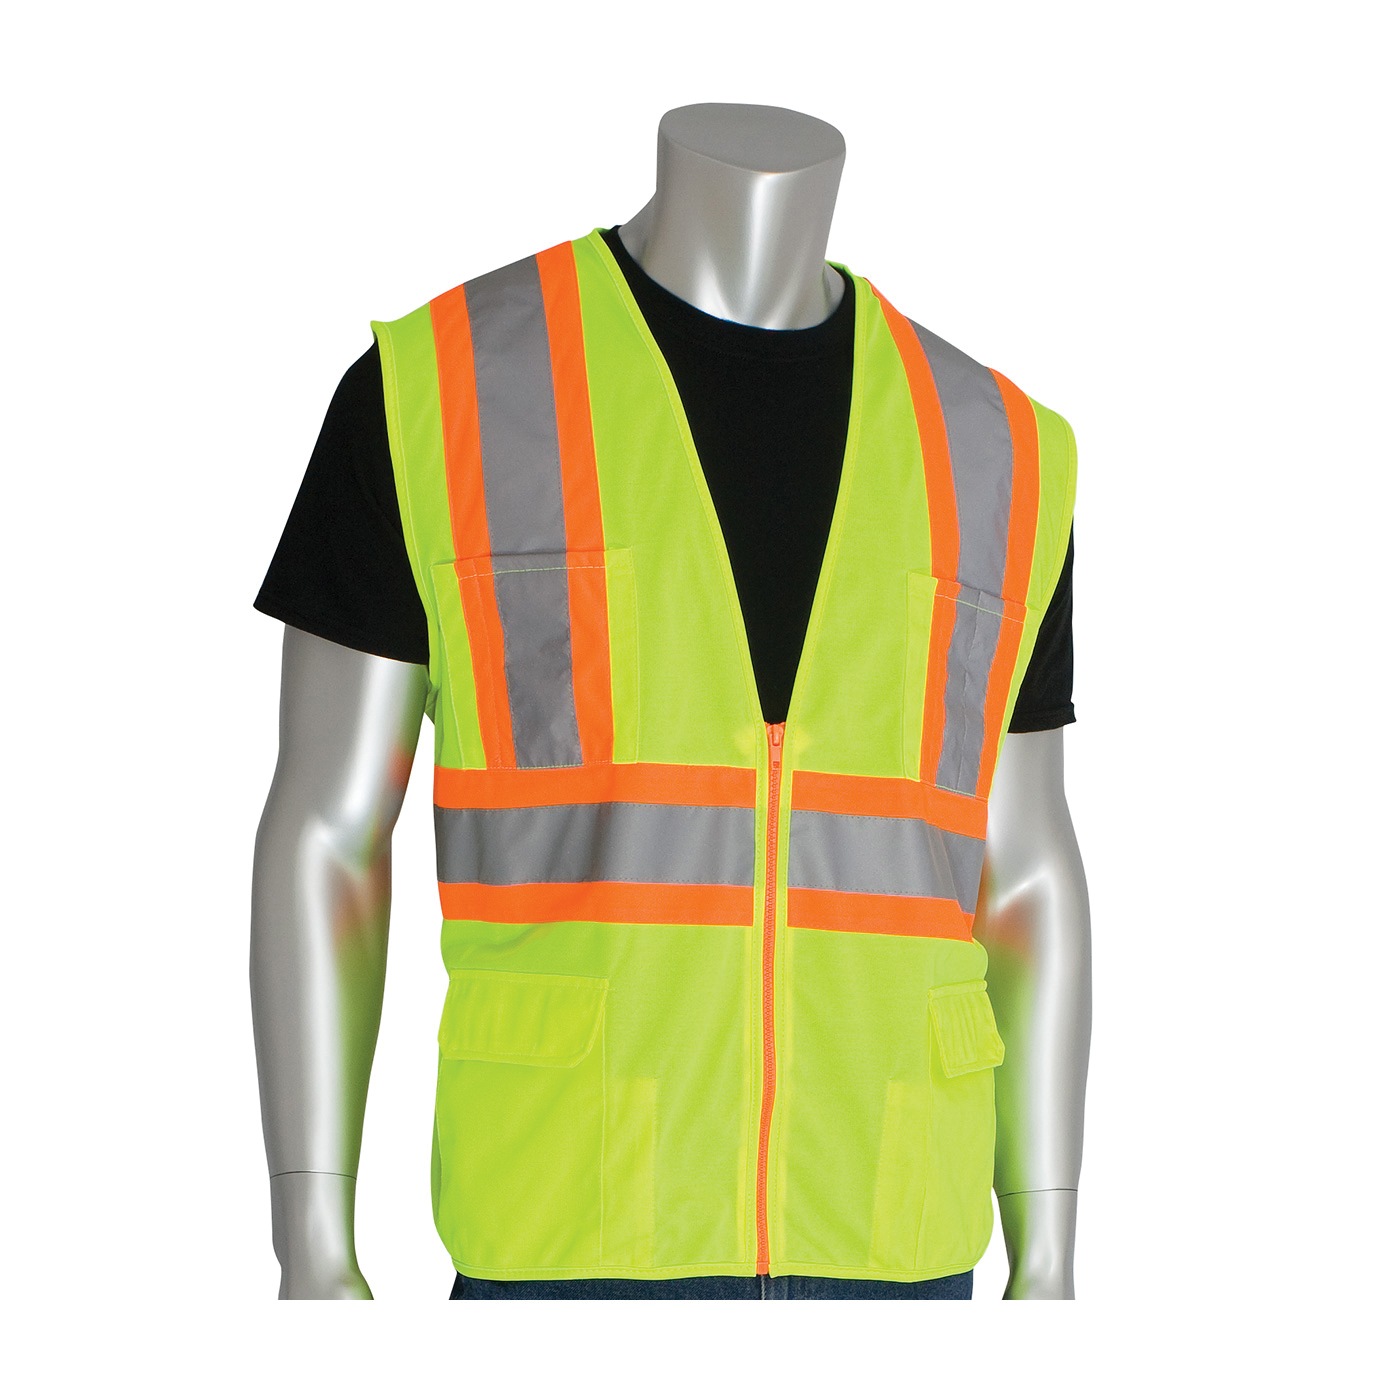 PIP® 302-MAPLY-M 2-Tone Premium Surveyor Safety Vest, M, Hi-Viz Lime Yellow, Polyester, Zipper Closure, 11 Pockets, ANSI Class: Class 2, Specifications Met: ANSI 107 Type R